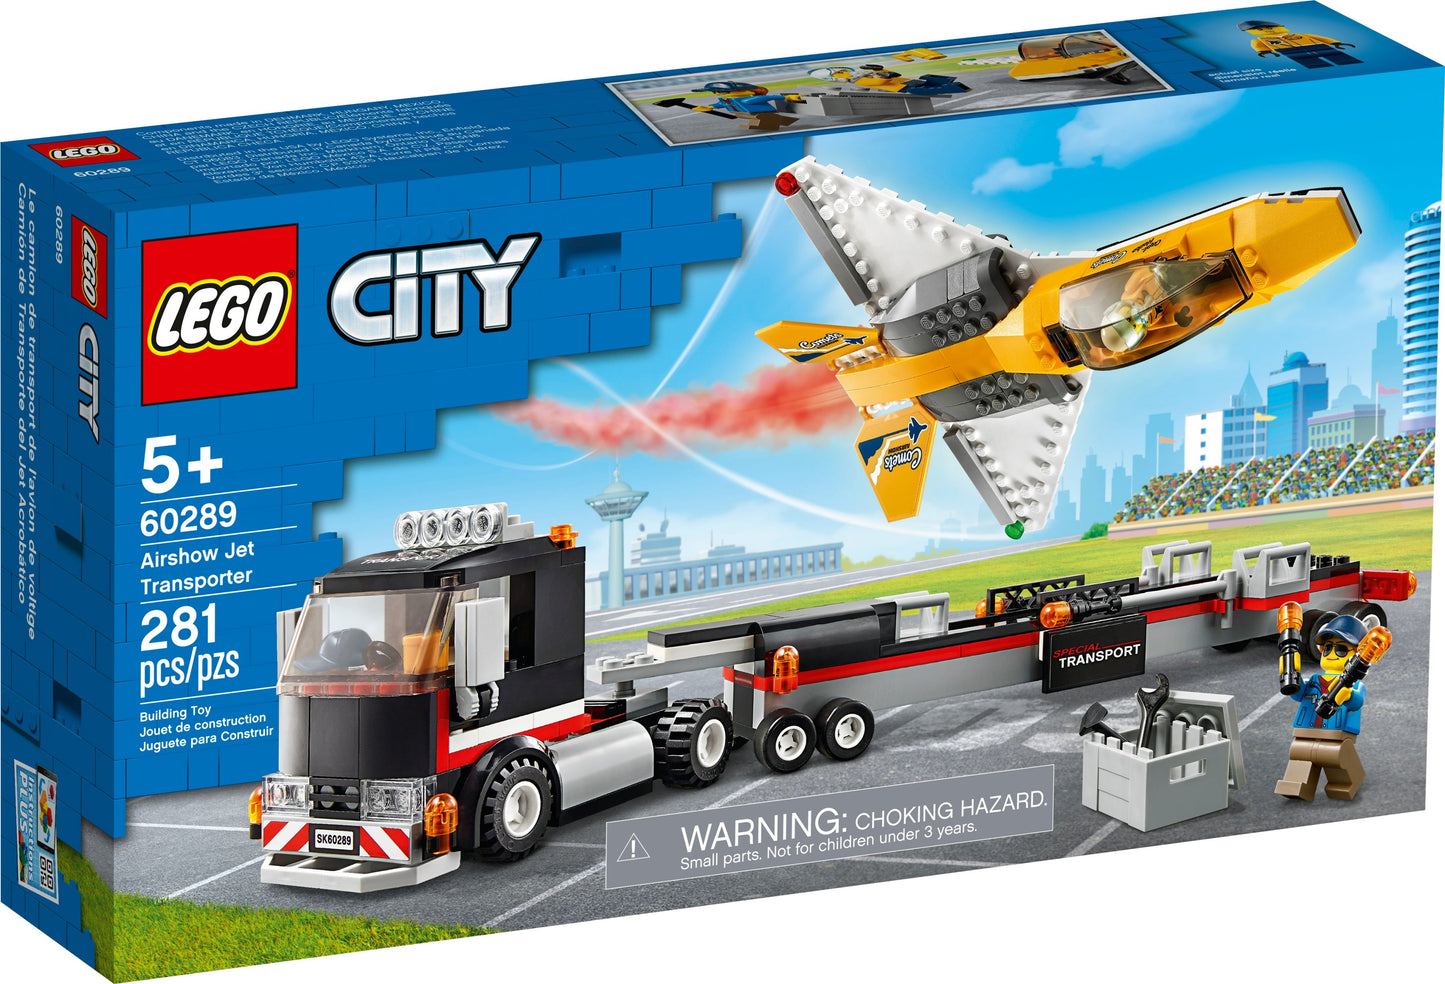 City 60289 Flugshow-Jet-Transporter